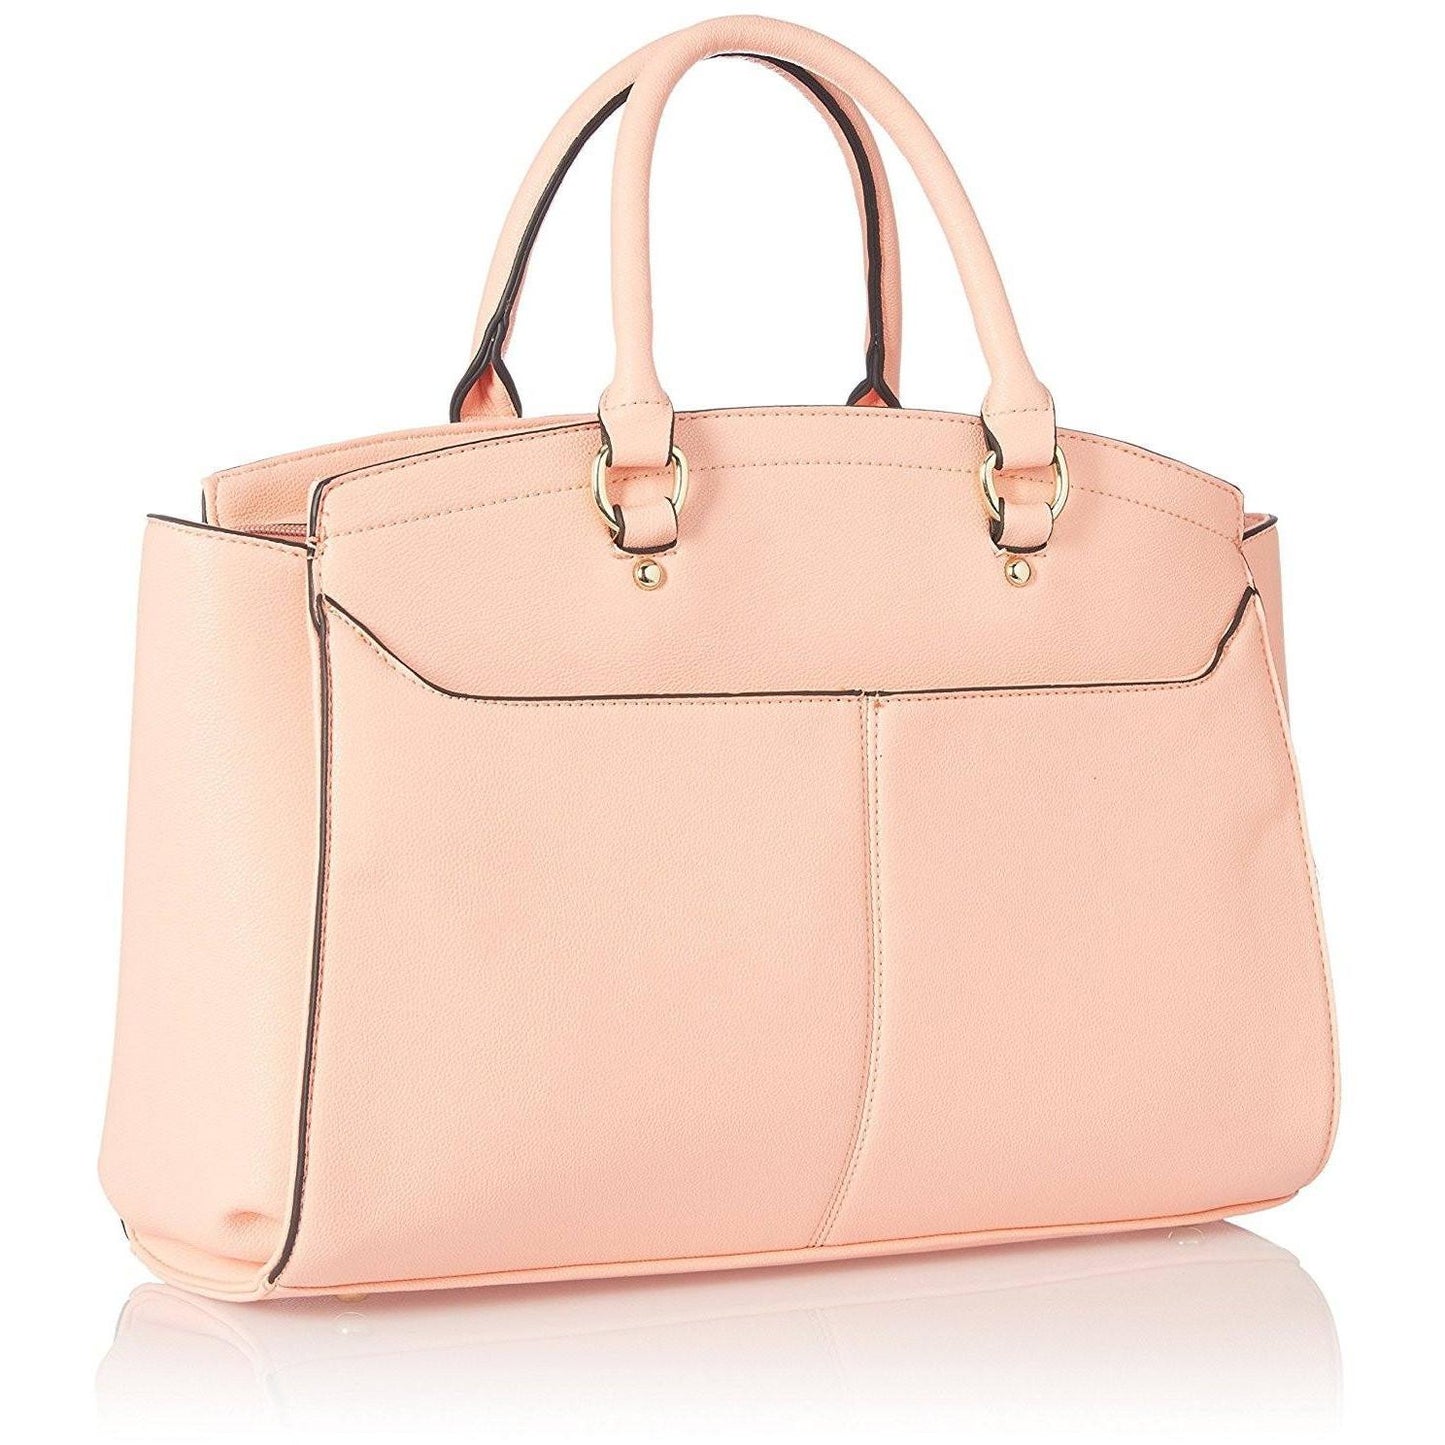 Cathy London Women's Handbag, Material- Synthethic Leather, Colour- Peach